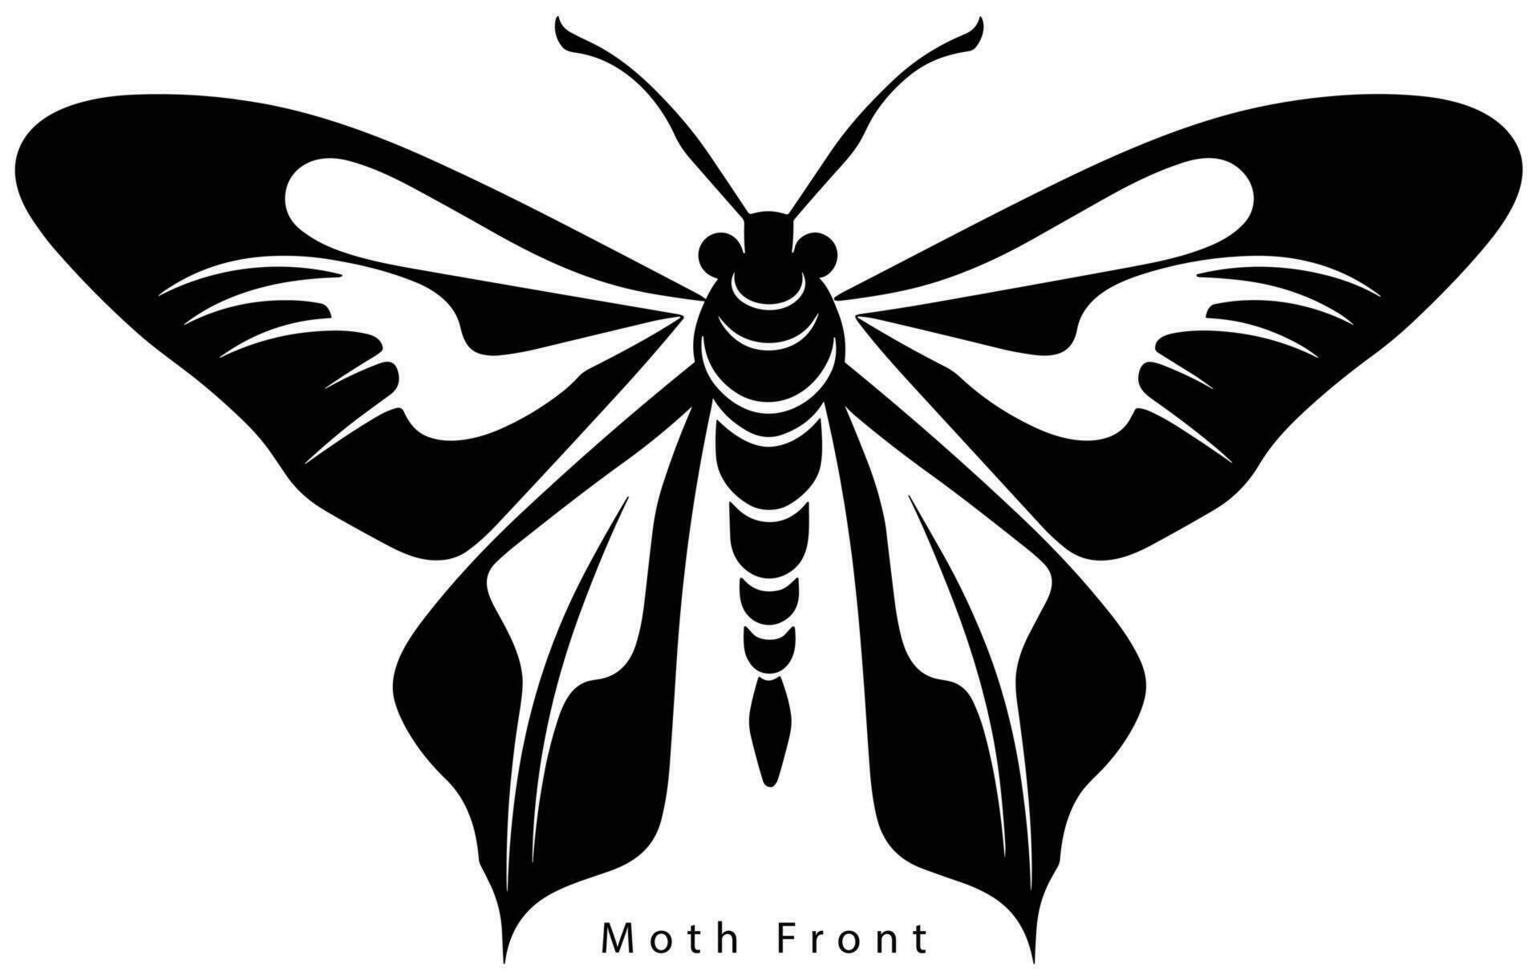 monarca borboleta silhueta. vetor ilustração